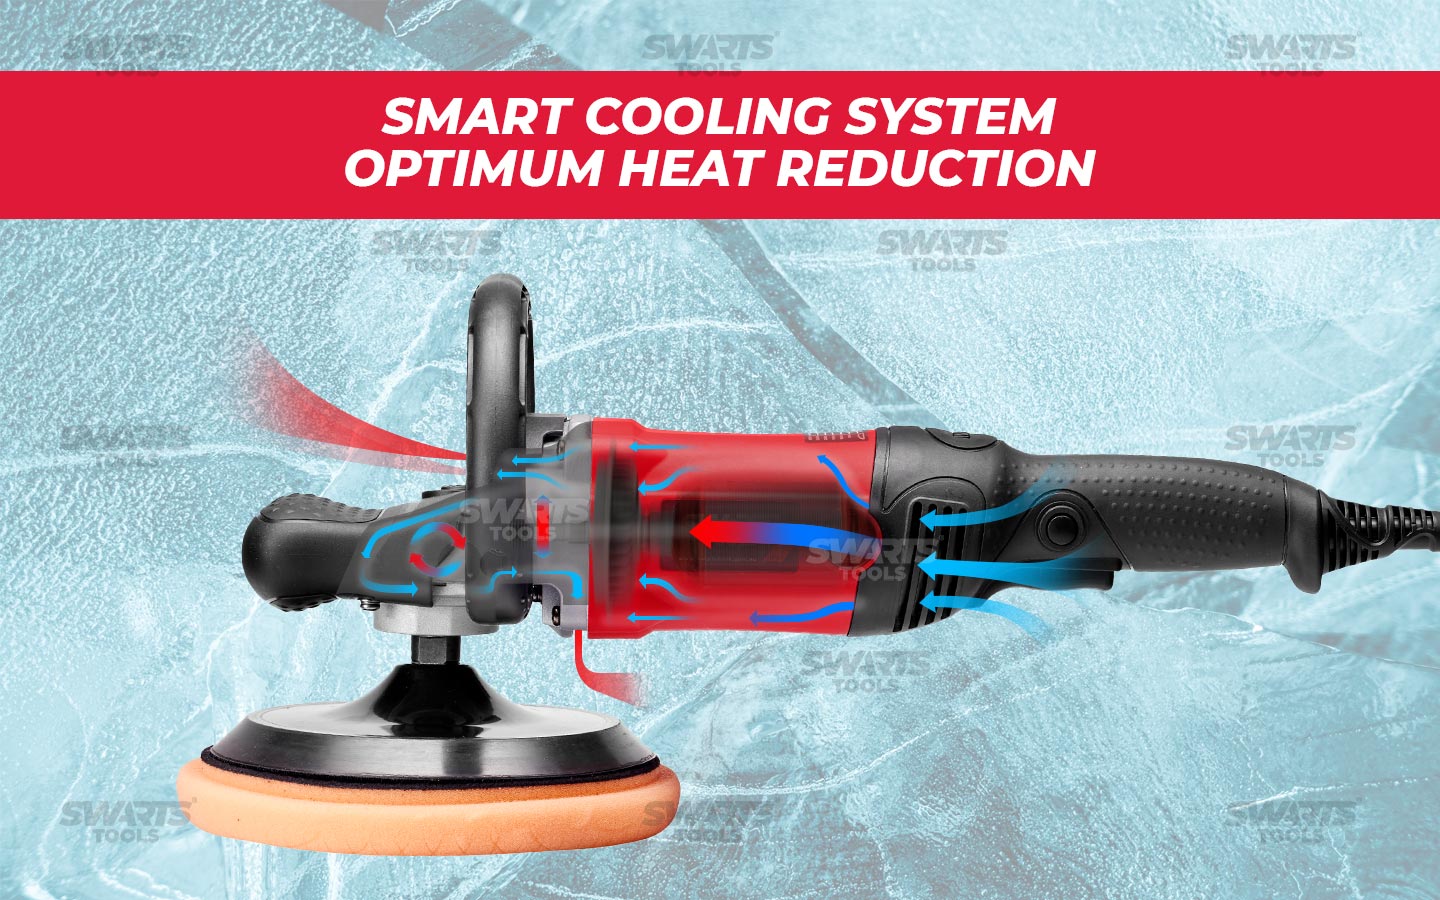 Smart cooling system optimum hear reduction